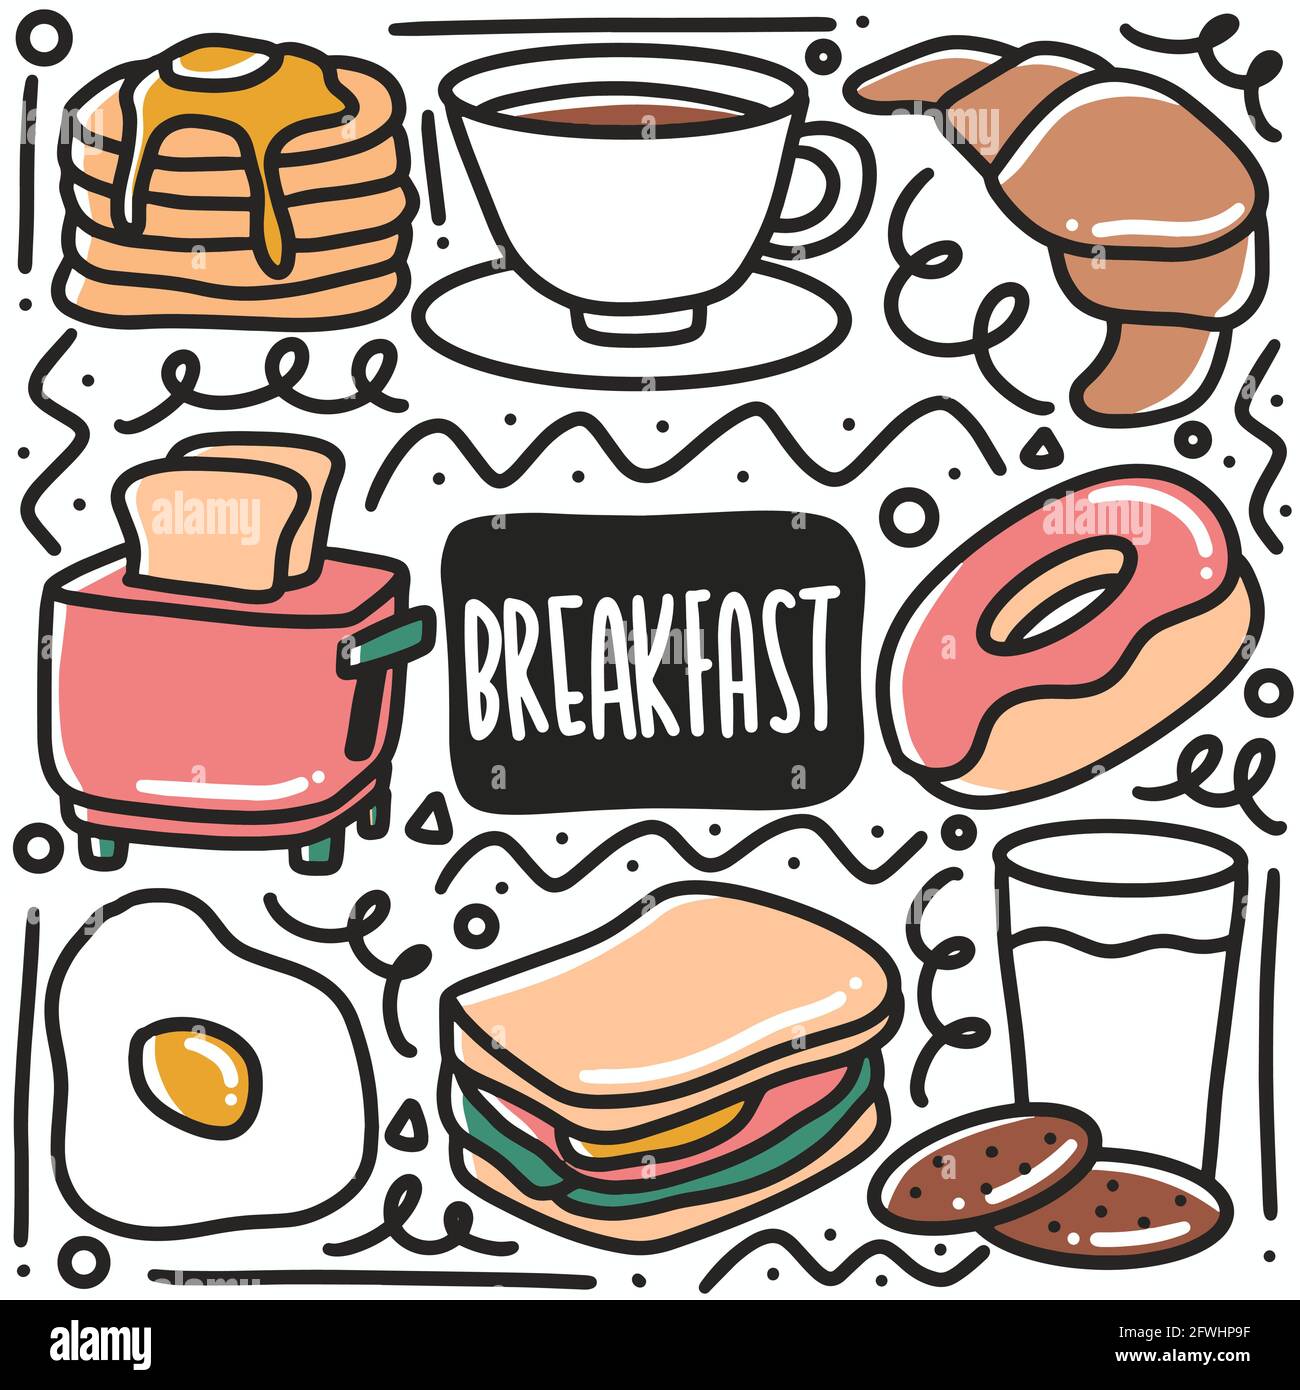 hand-drawn doodle breakfast food art design element illustration Stock Vector